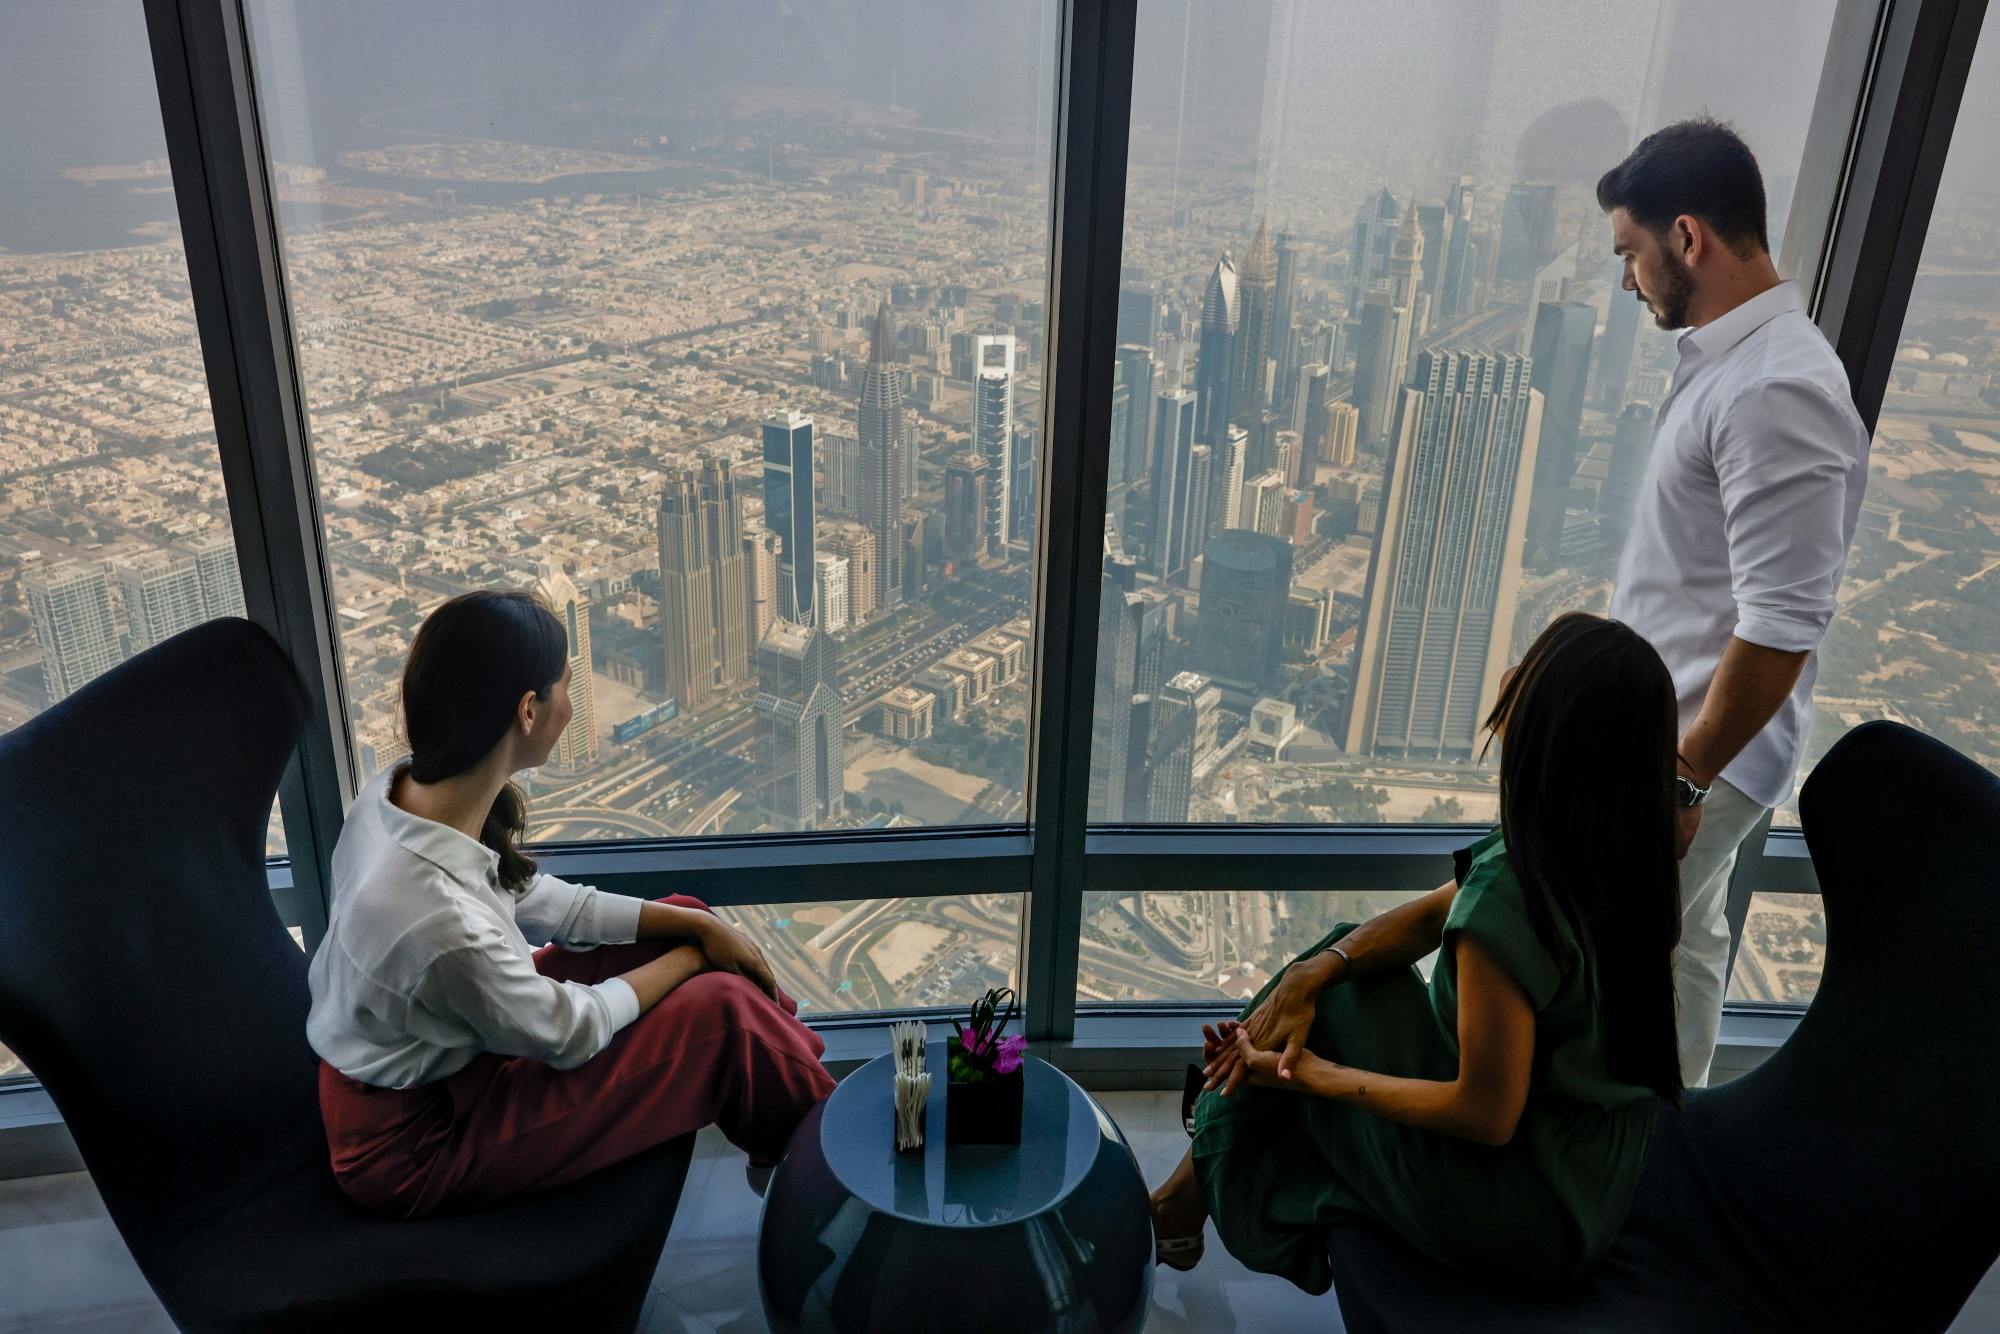 Burj Khalifa fast-track tickets: levels 124, 125 and 148